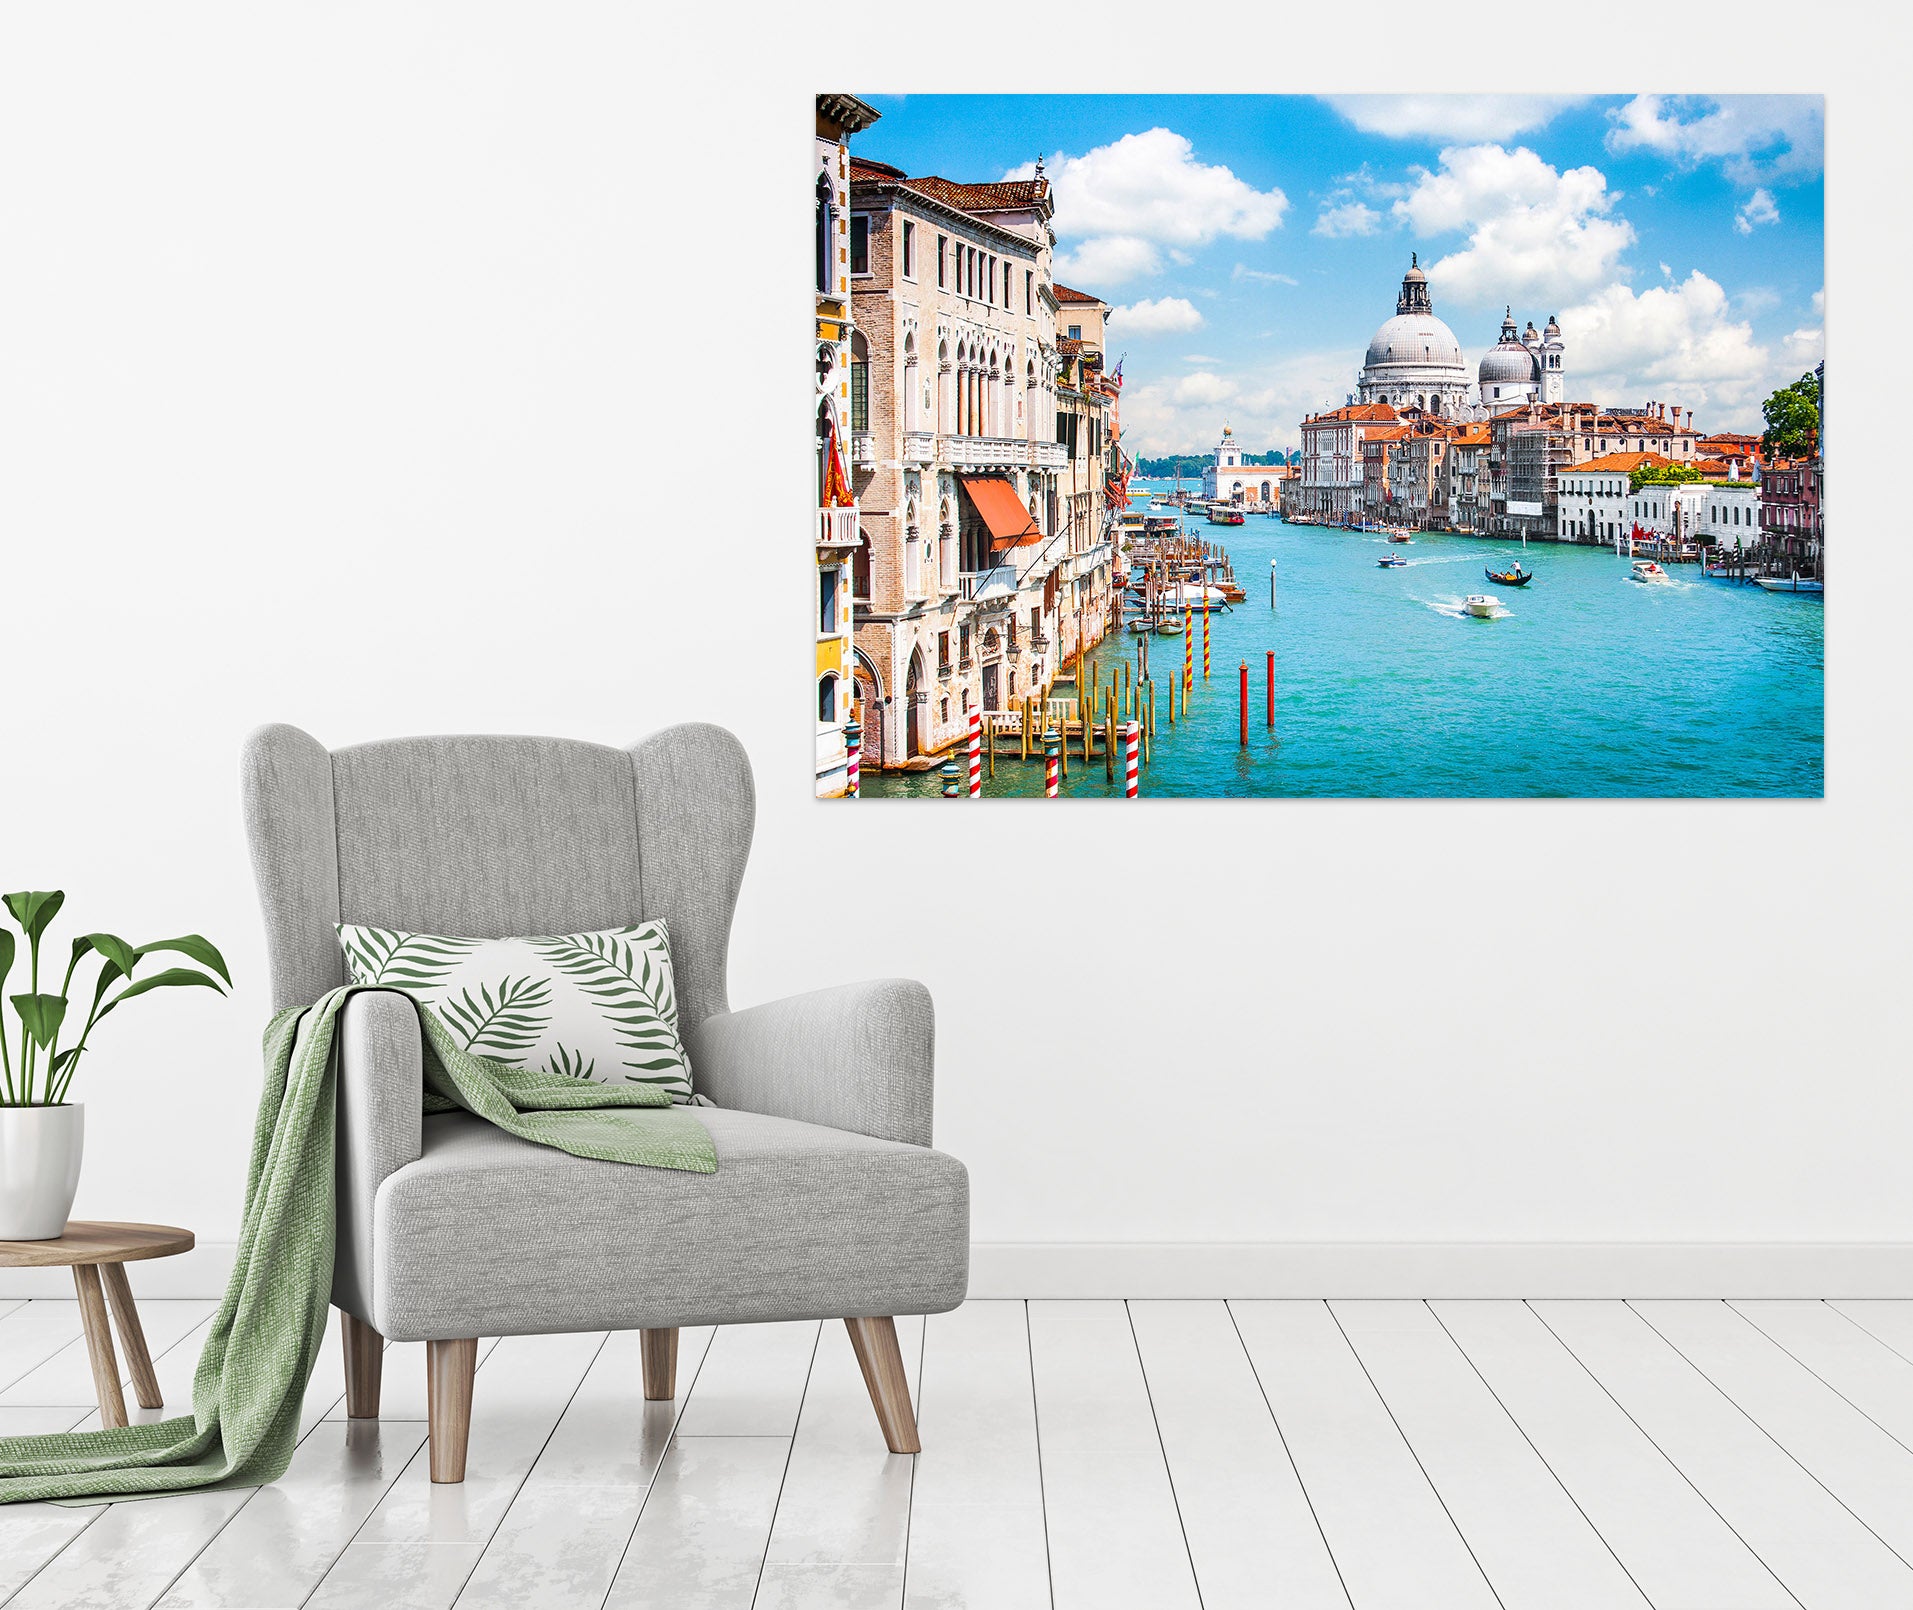 3D Water City Of Venice 001 Wall Sticker